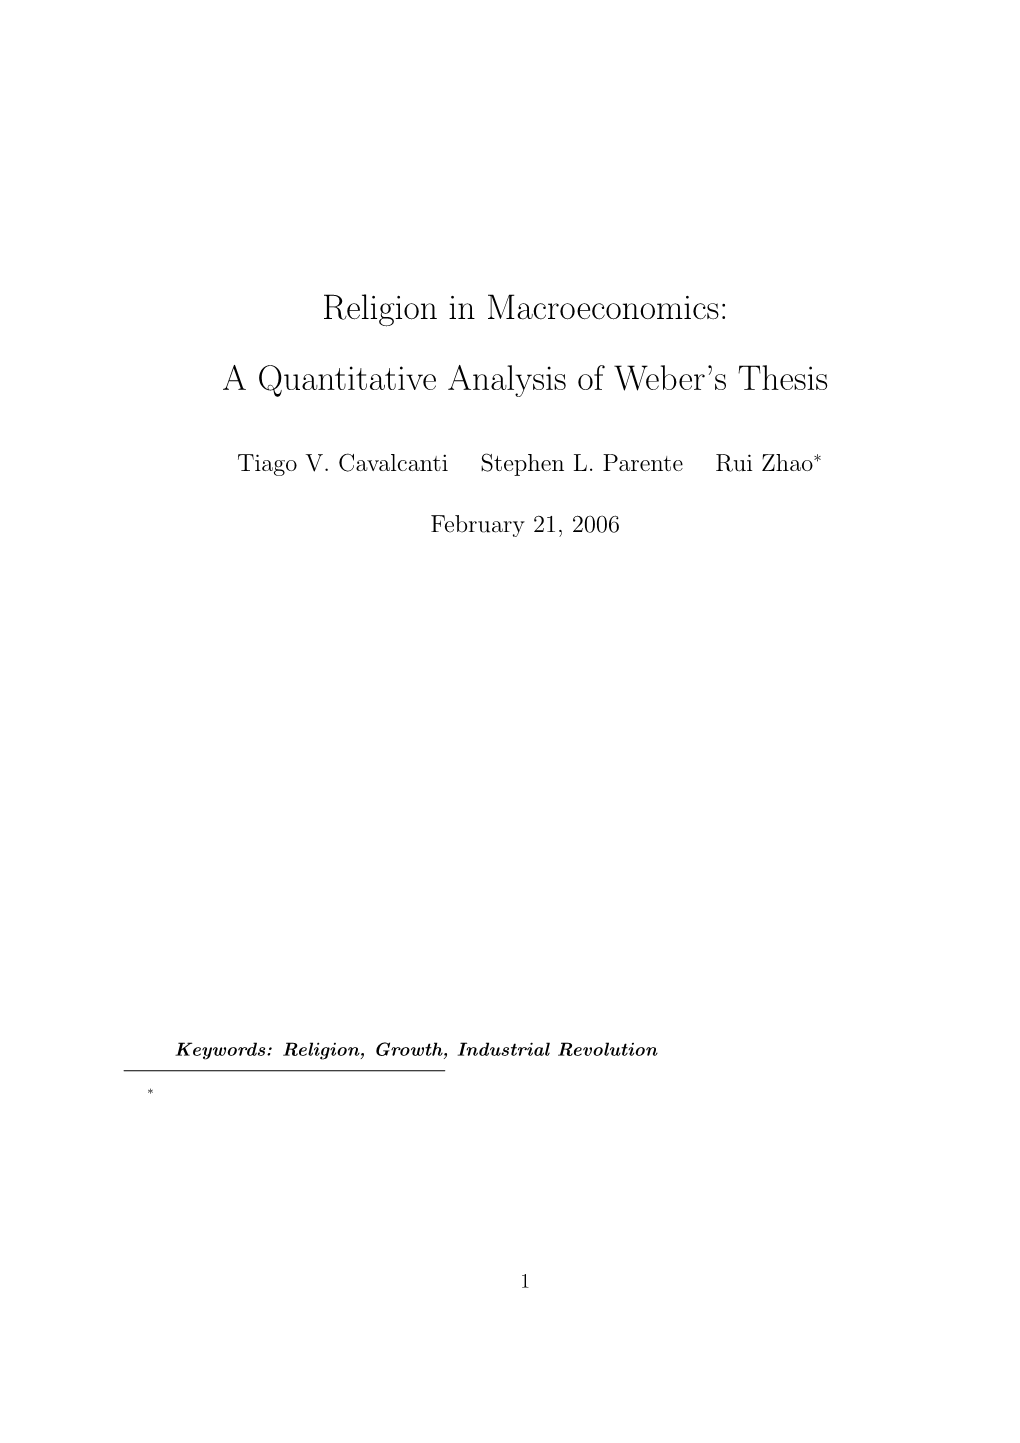 Religion in Macroeconomics: a Quantitative Analysis of Weber's